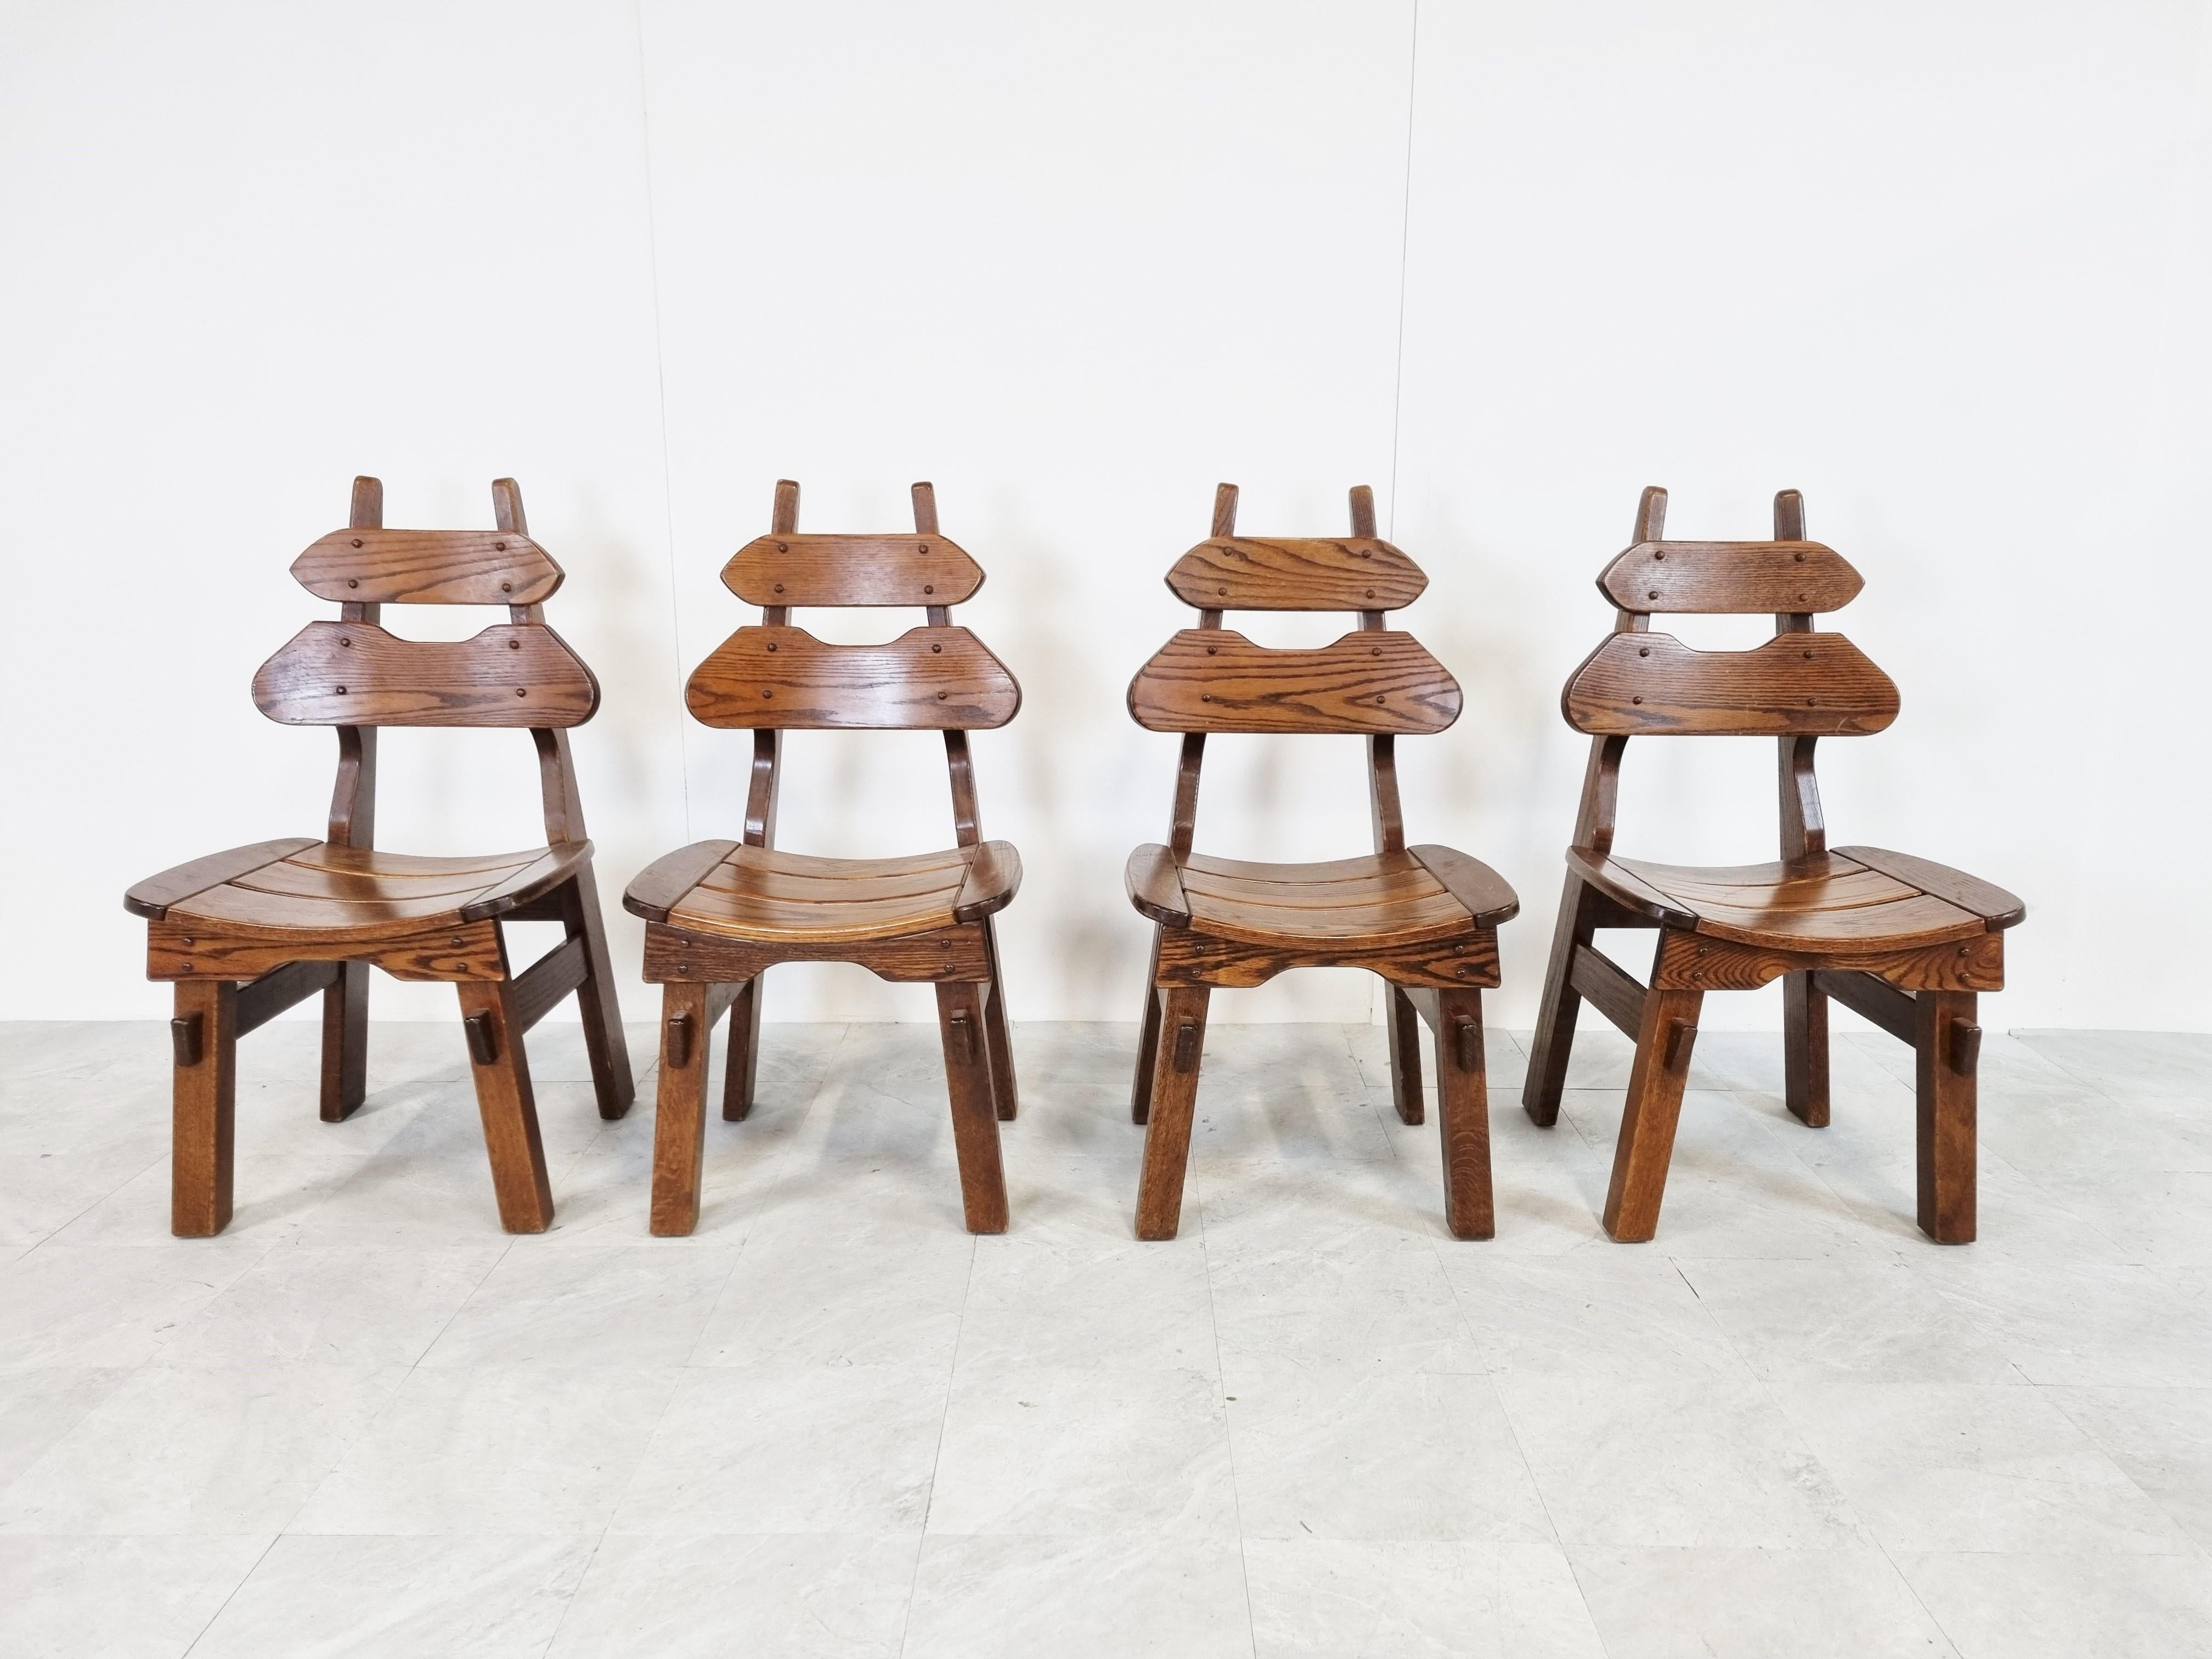 German Vintage Brutalist Dining Chairs, Set of 4, 1960s